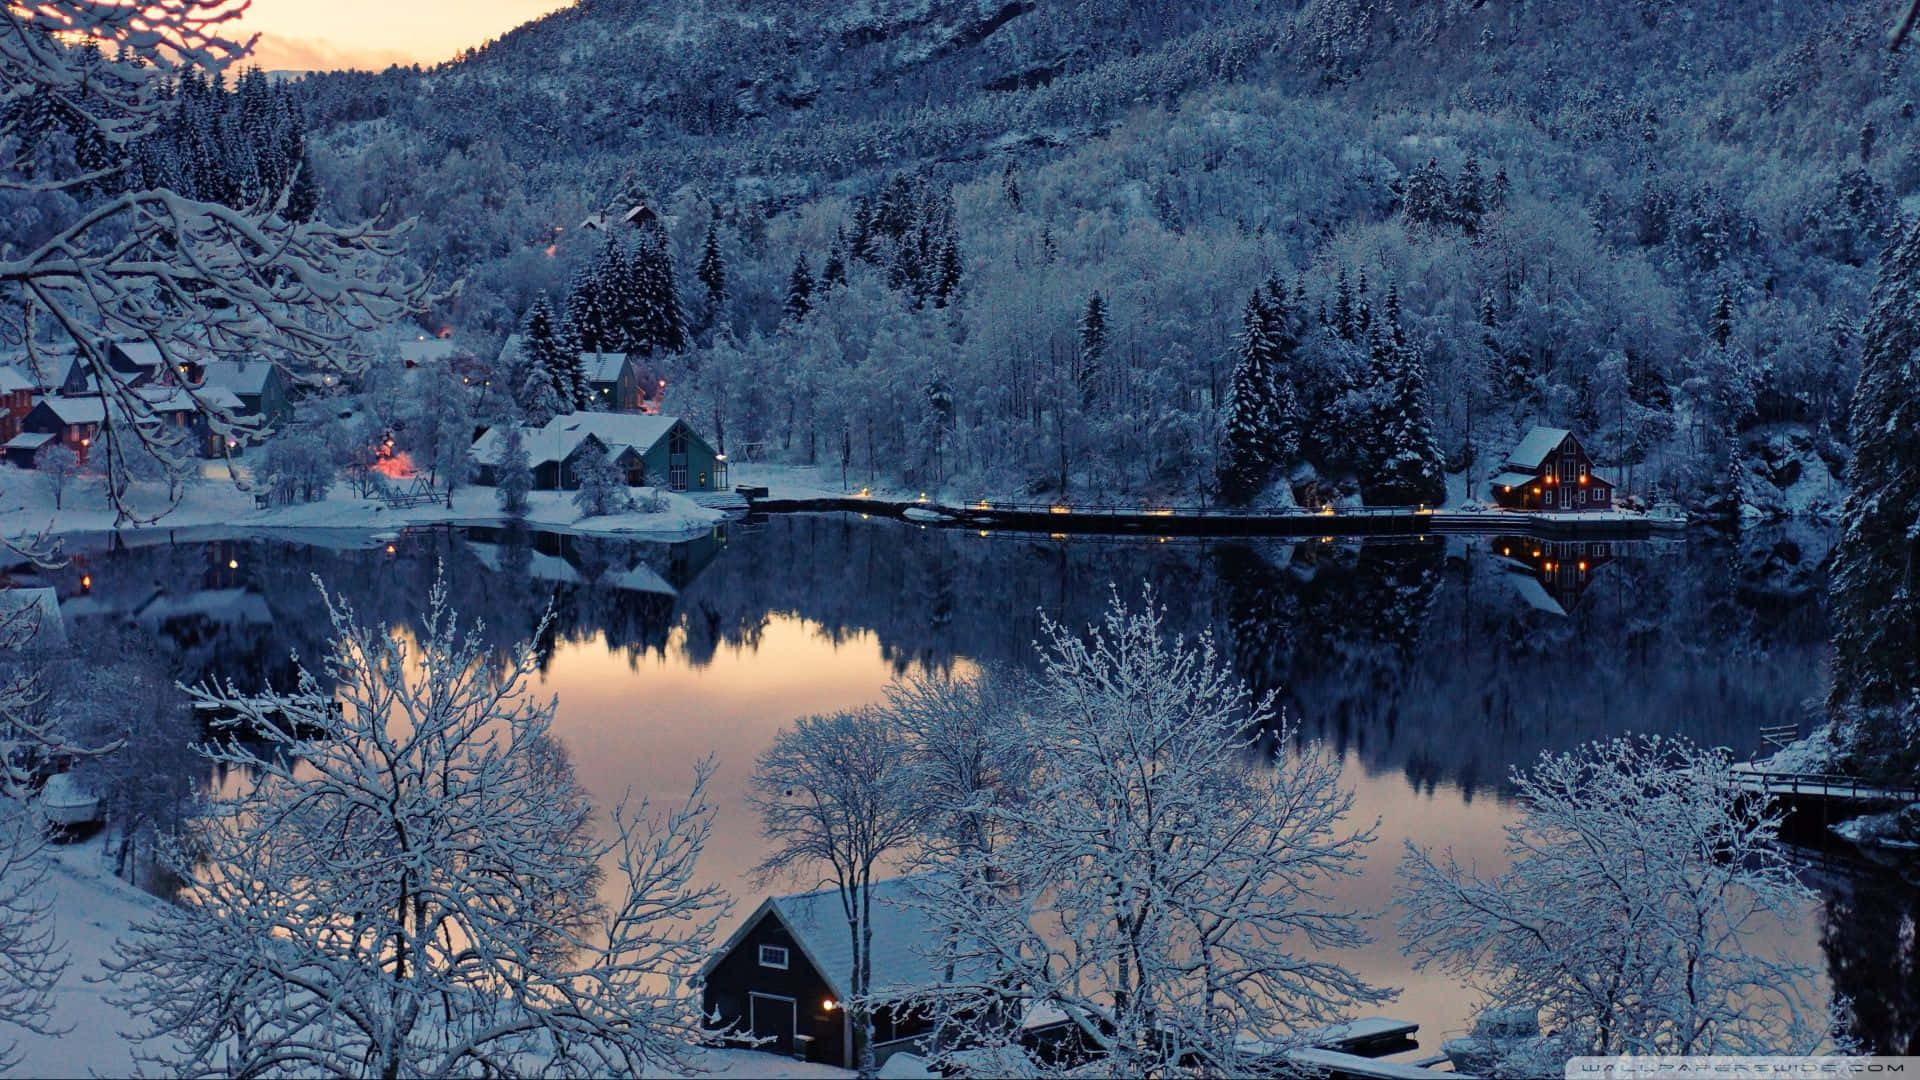 Enjoy the serene view of winter